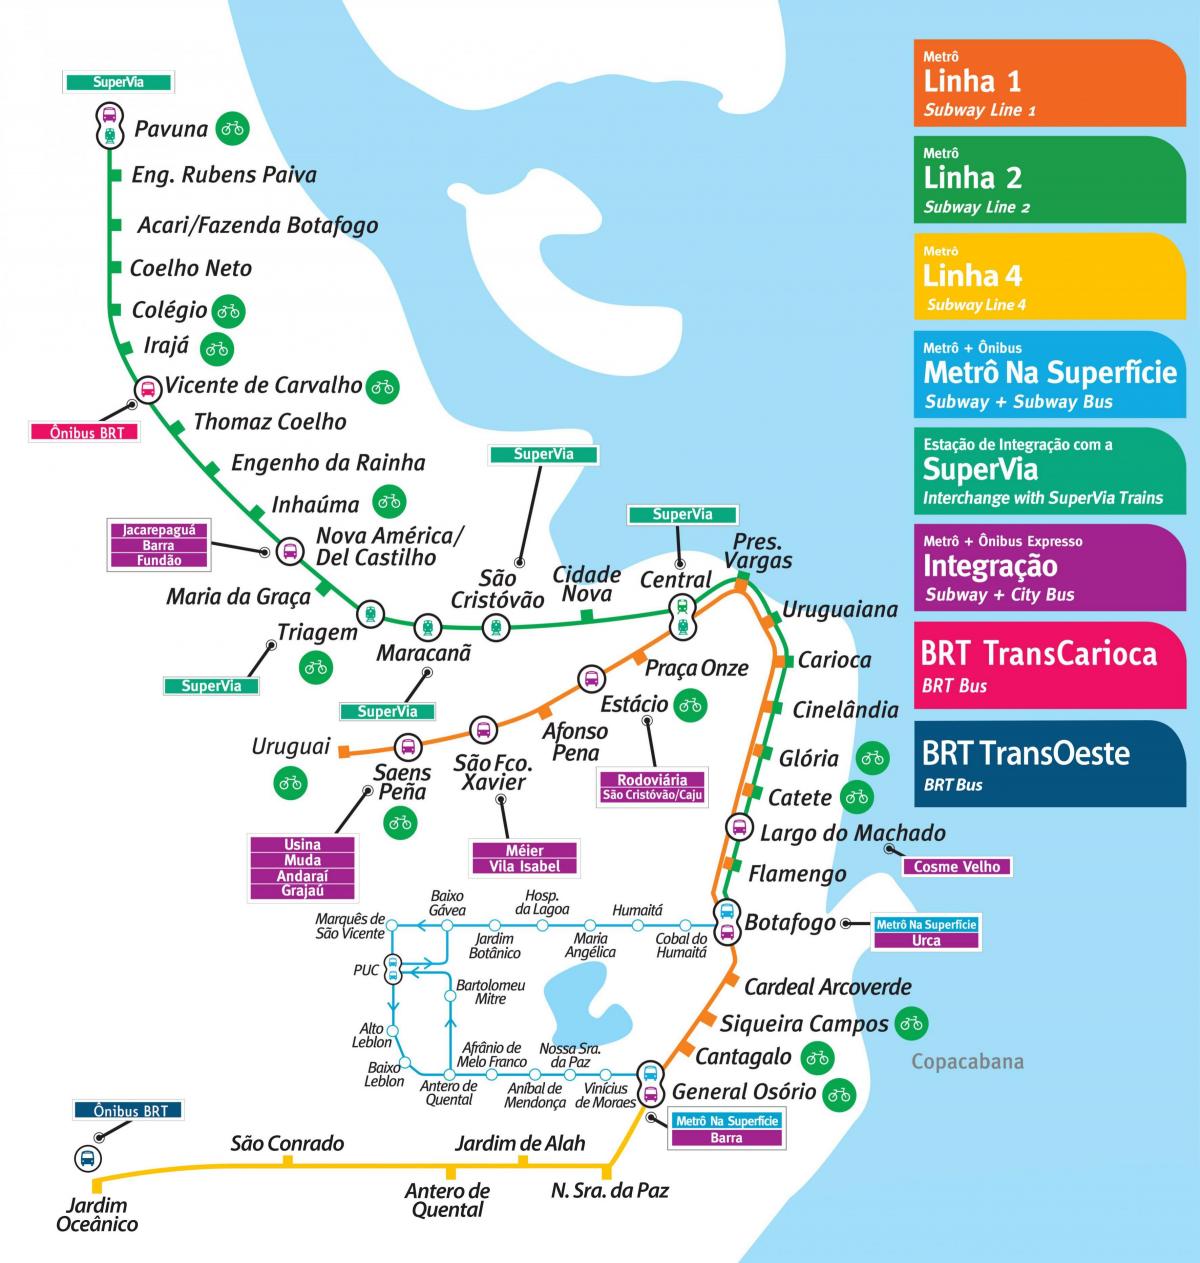 Map of Rio de Janeiro subway